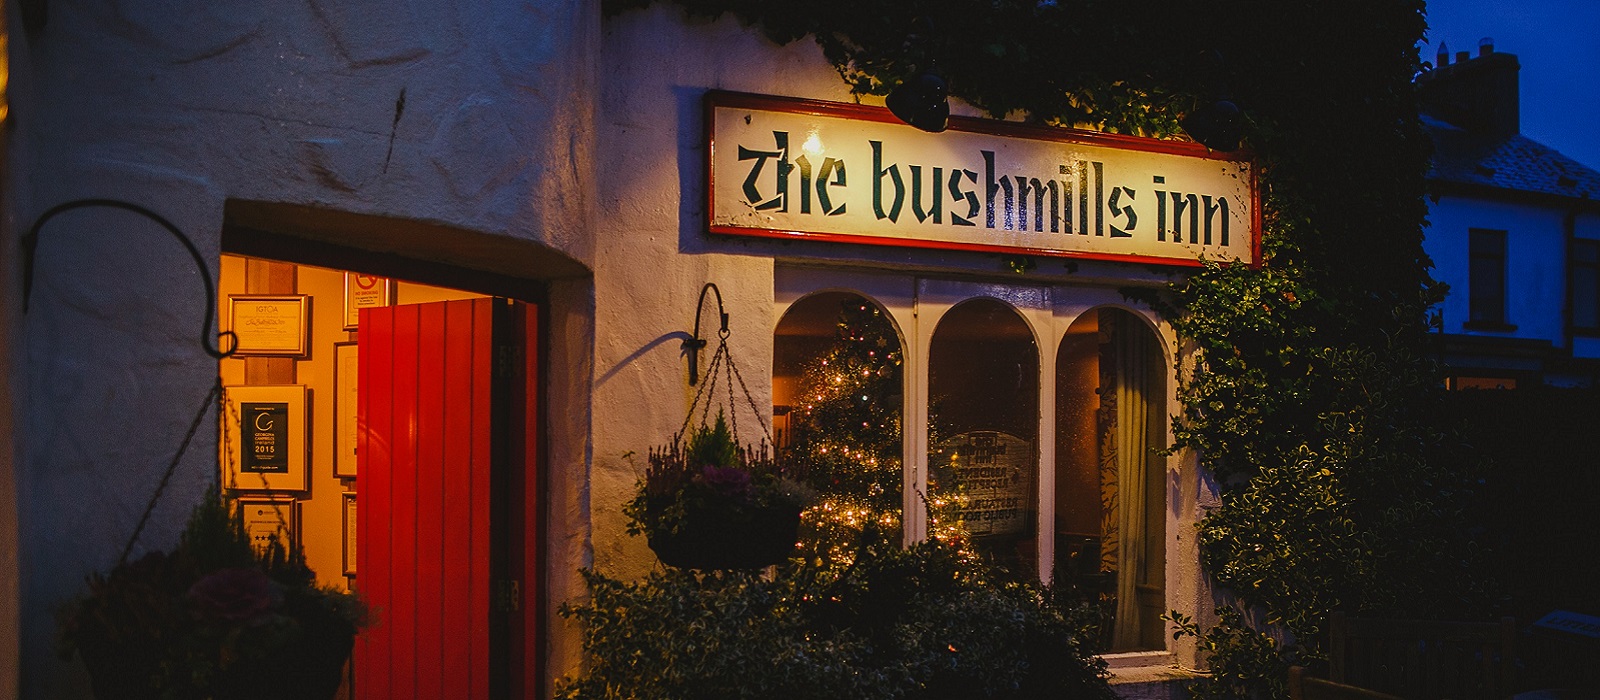 Bushmills Inn - Decorated for Christmas